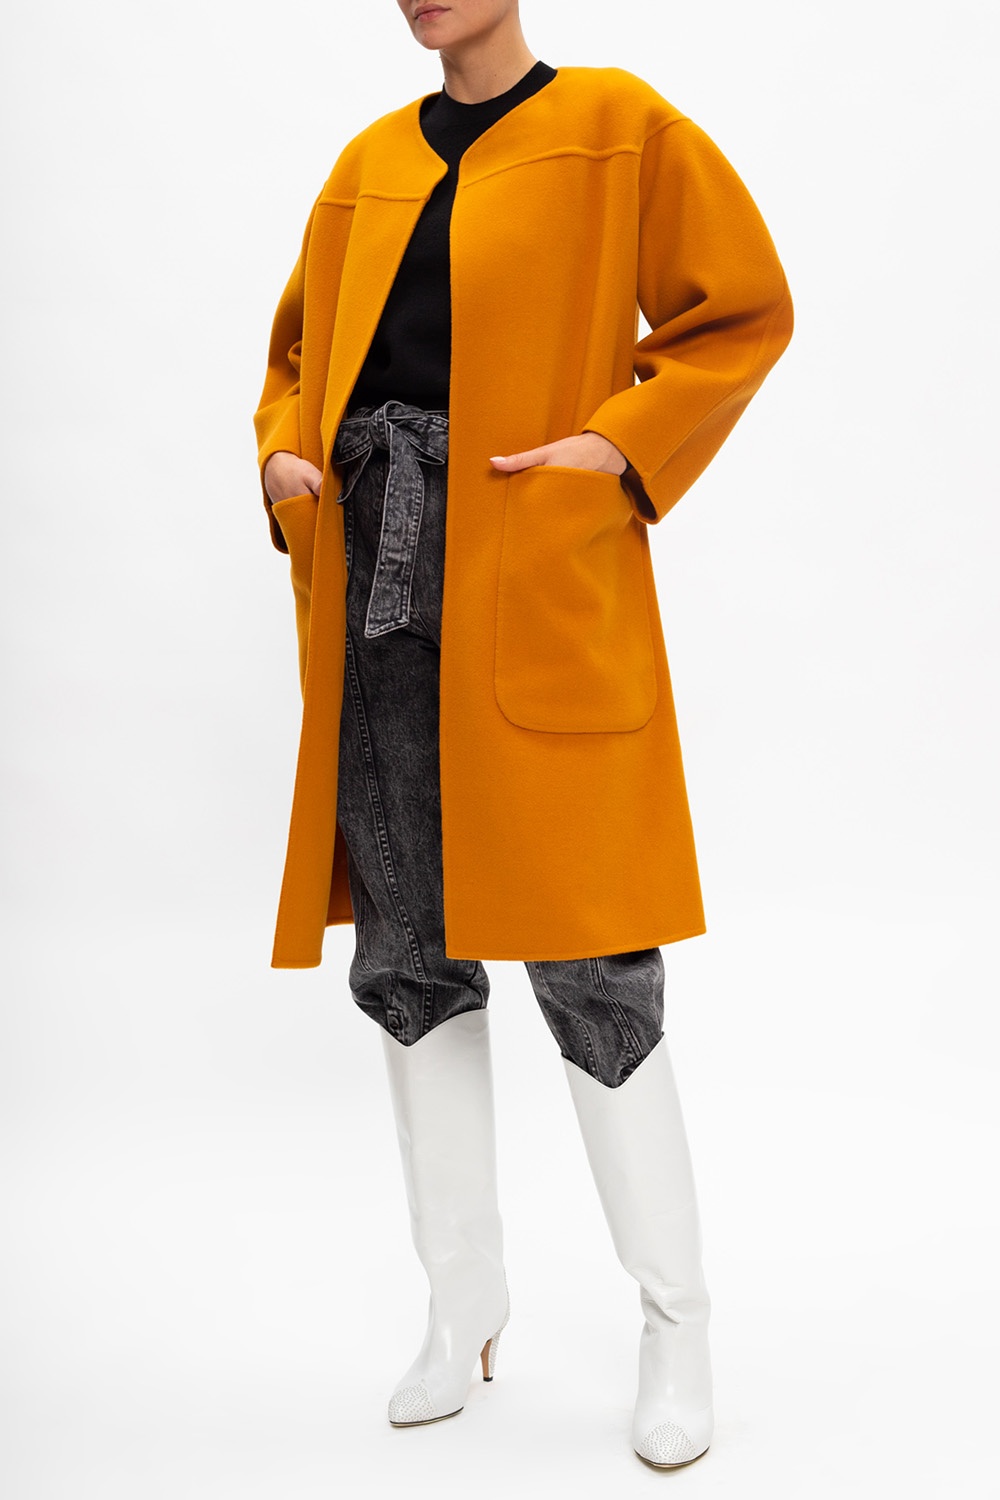 Chloé wool coat.